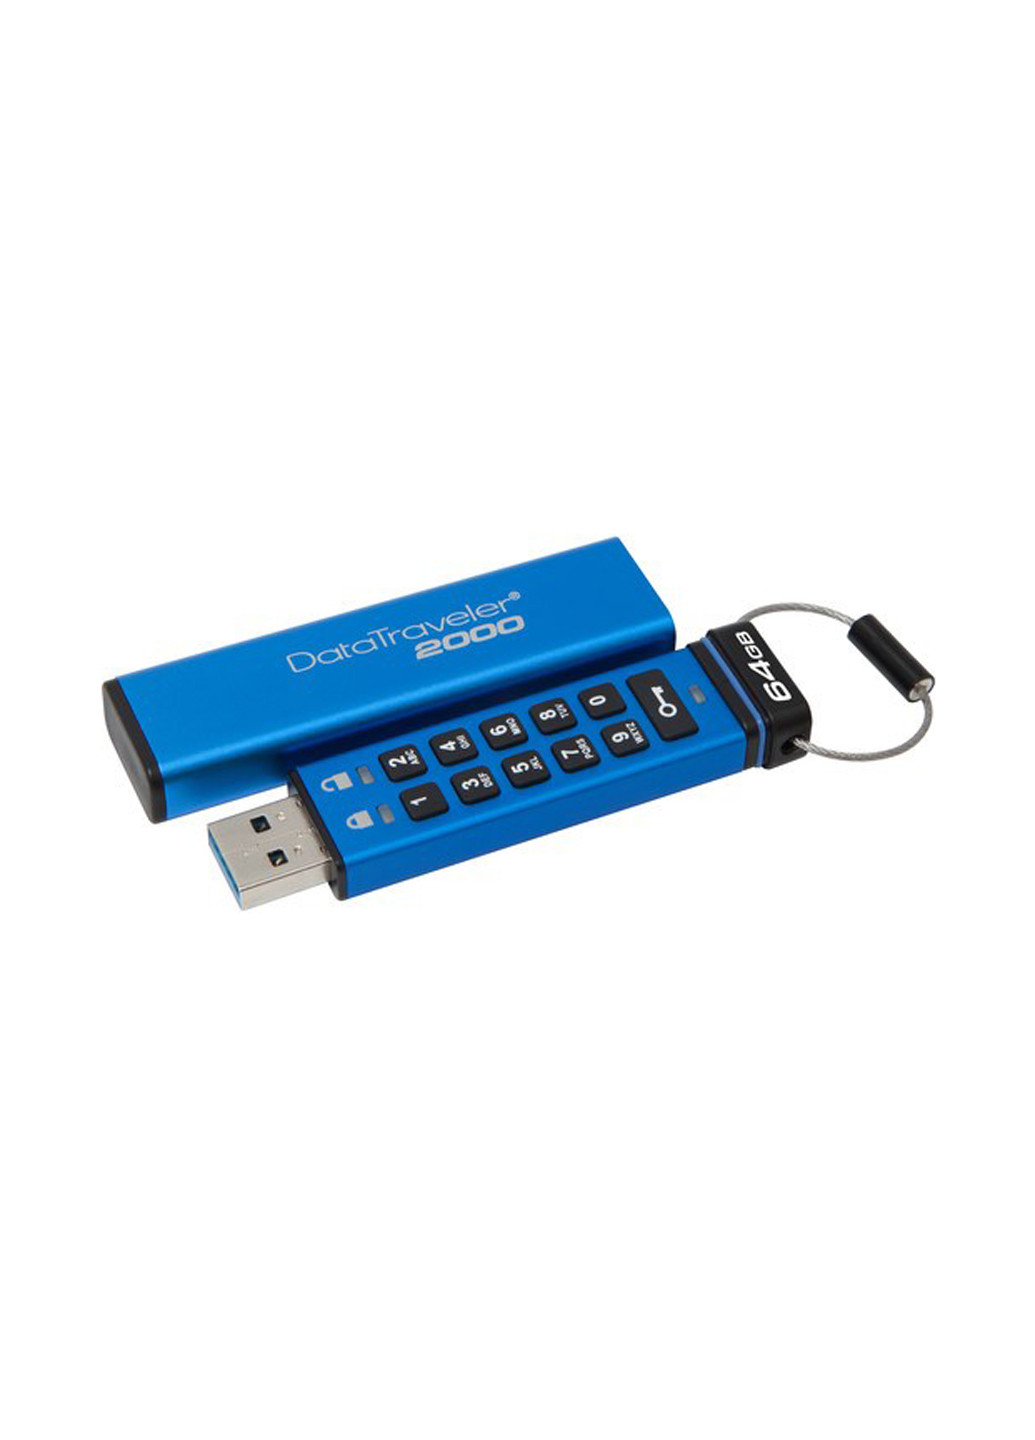 Флеш пам'ять USB DataTraveler 2000 64GB USB 3.1 (DT2000 / 64GB) Kingston флеш память usb kingston datatraveler 2000 64gb usb 3.1 (dt2000/64gb) (135165495)